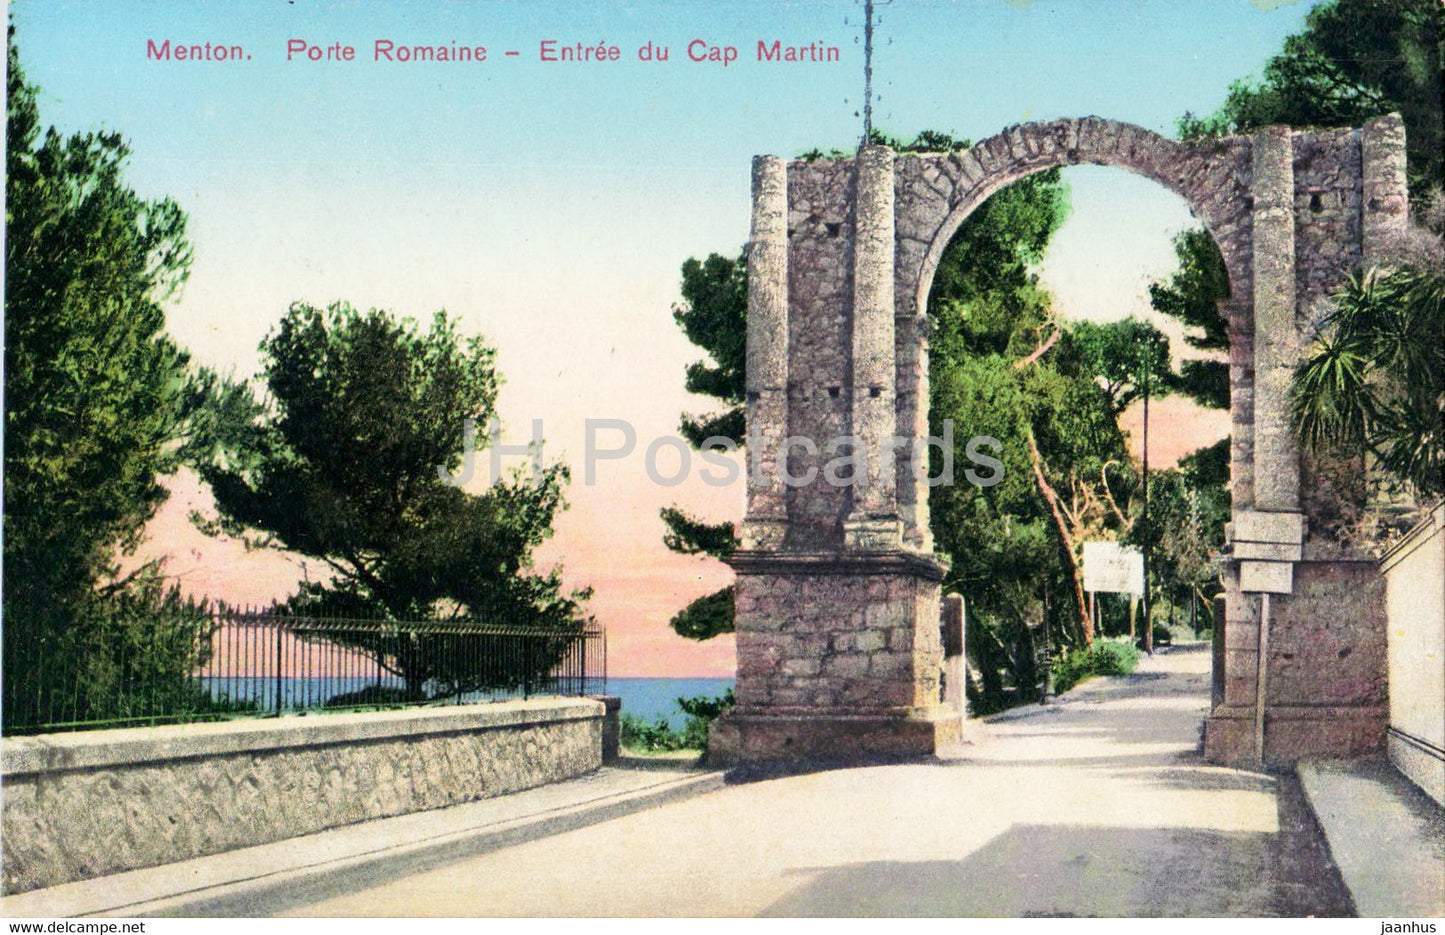 Menton - Porte Romaine - Entree du Cap Martin - ancient world - 9468 - old postcard - France - unused - JH Postcards